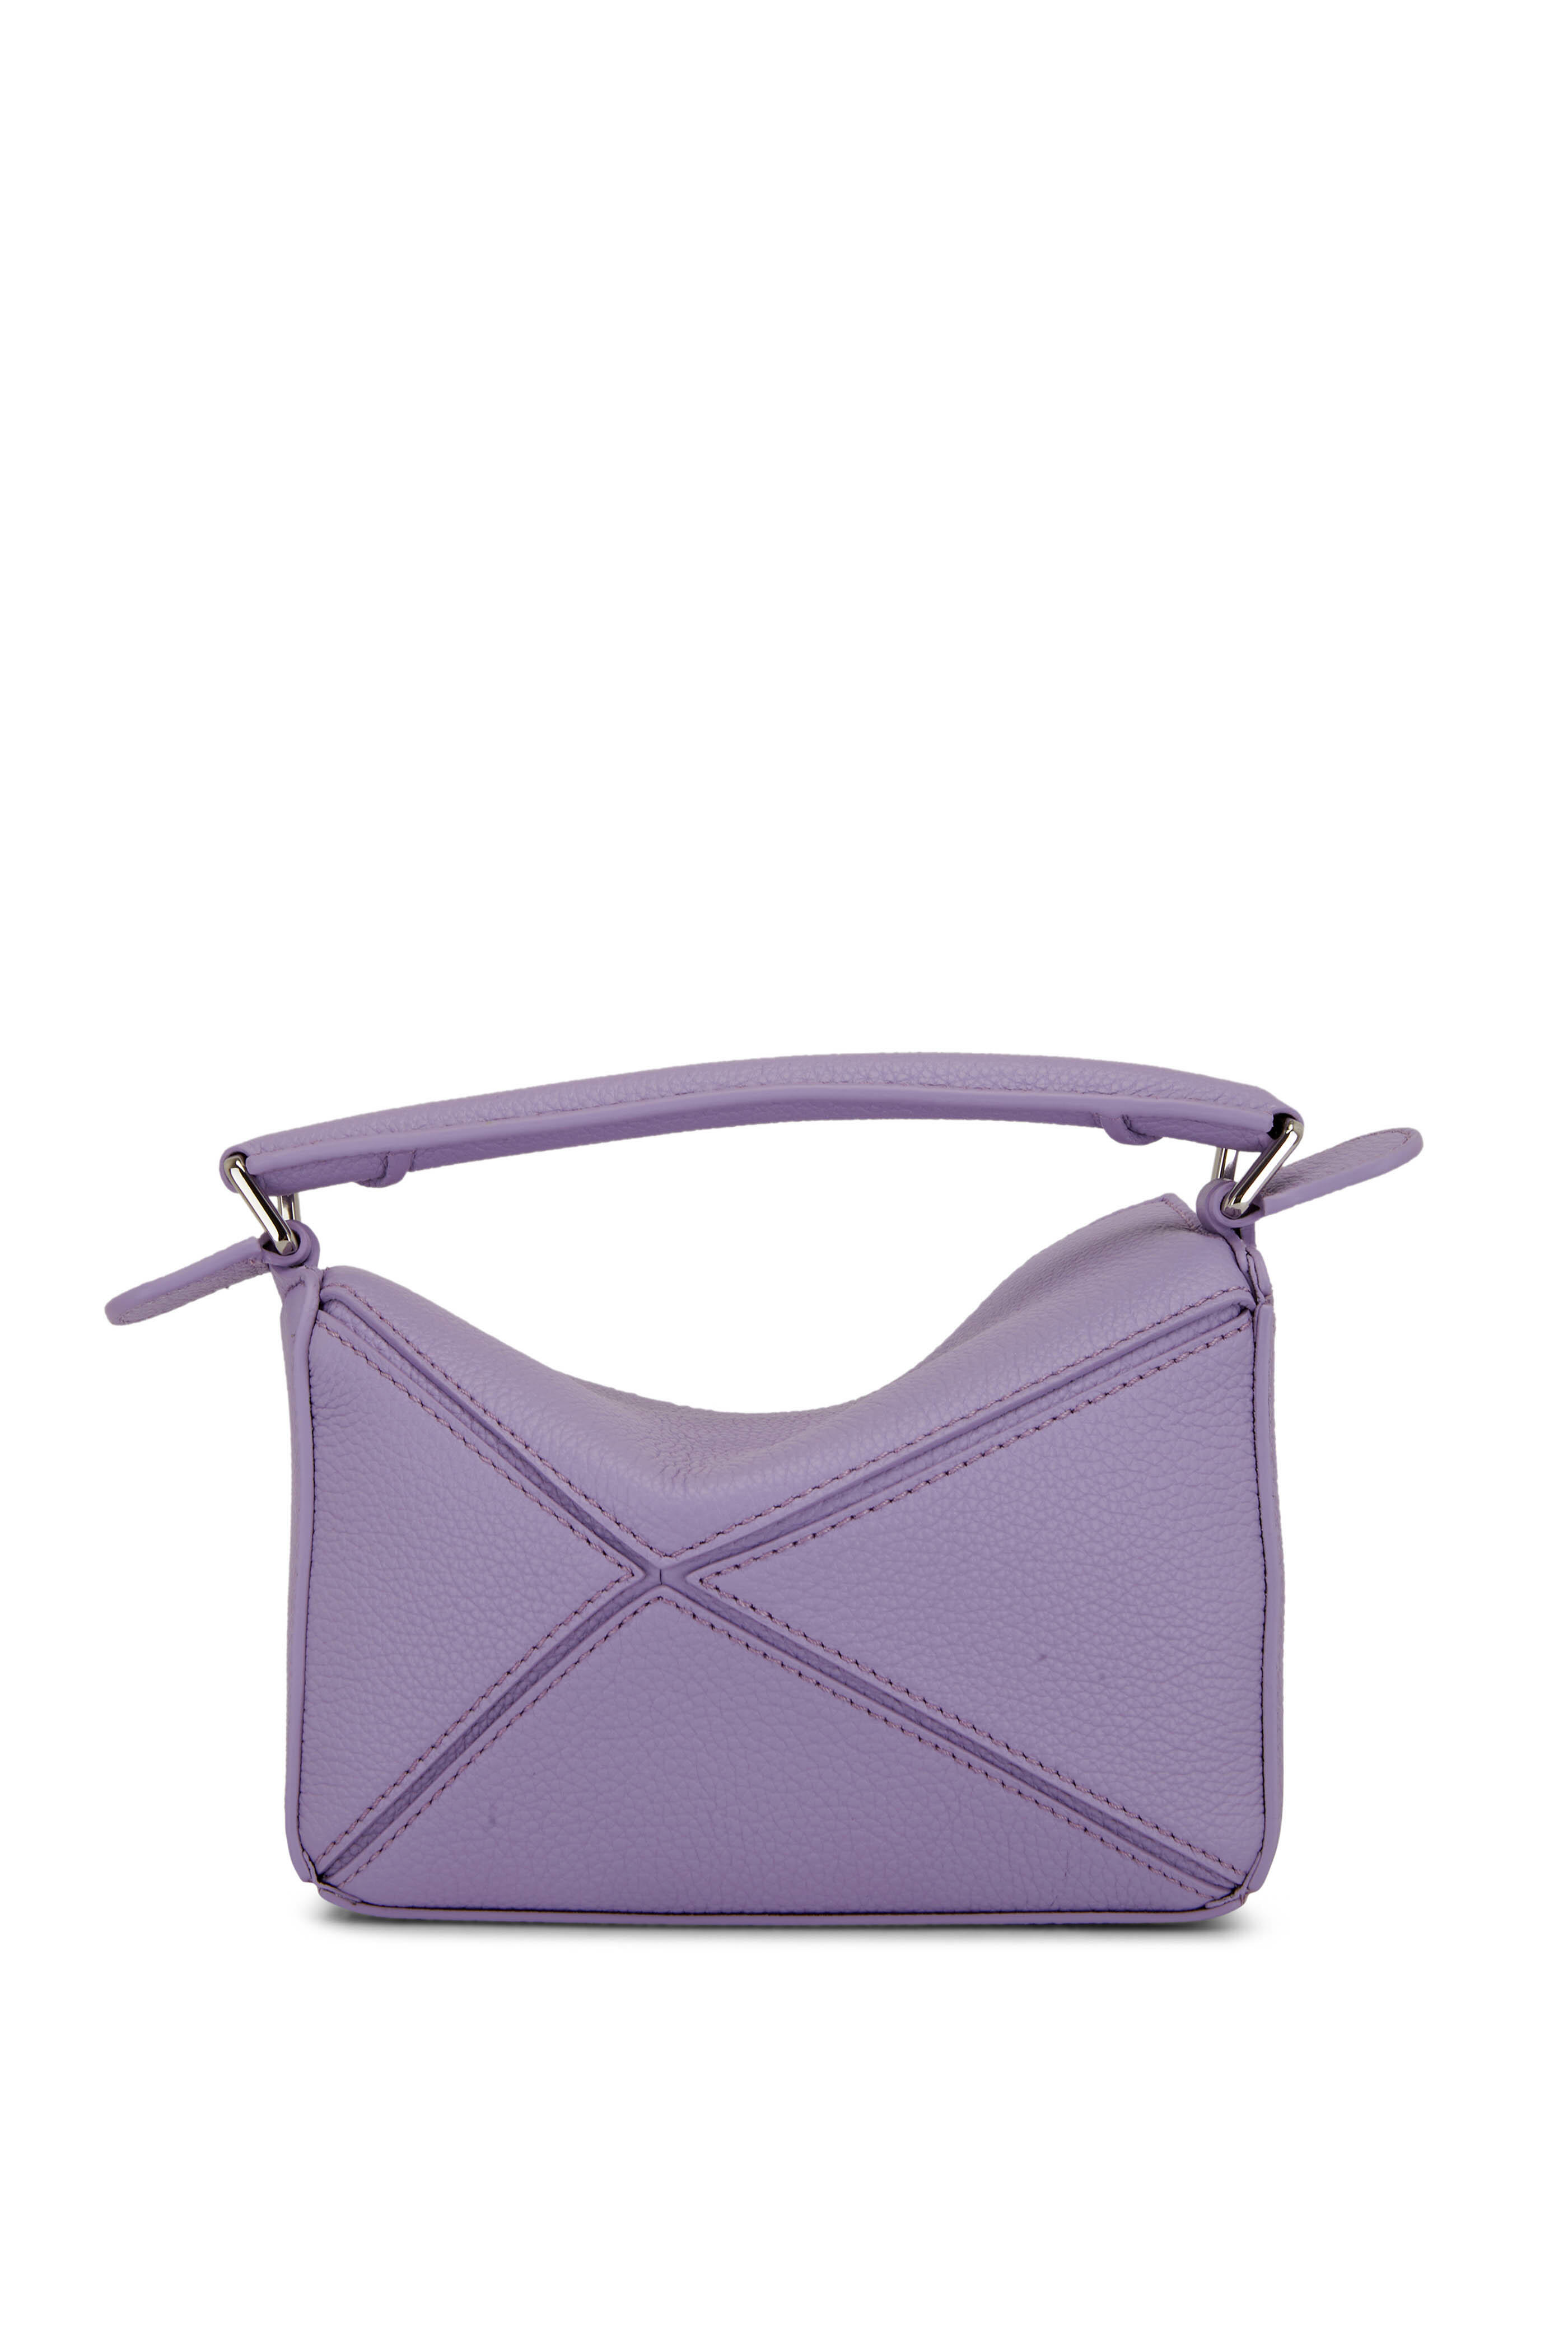 Loewe - Mini Puzzle Lavender Leather Shoulder Bag